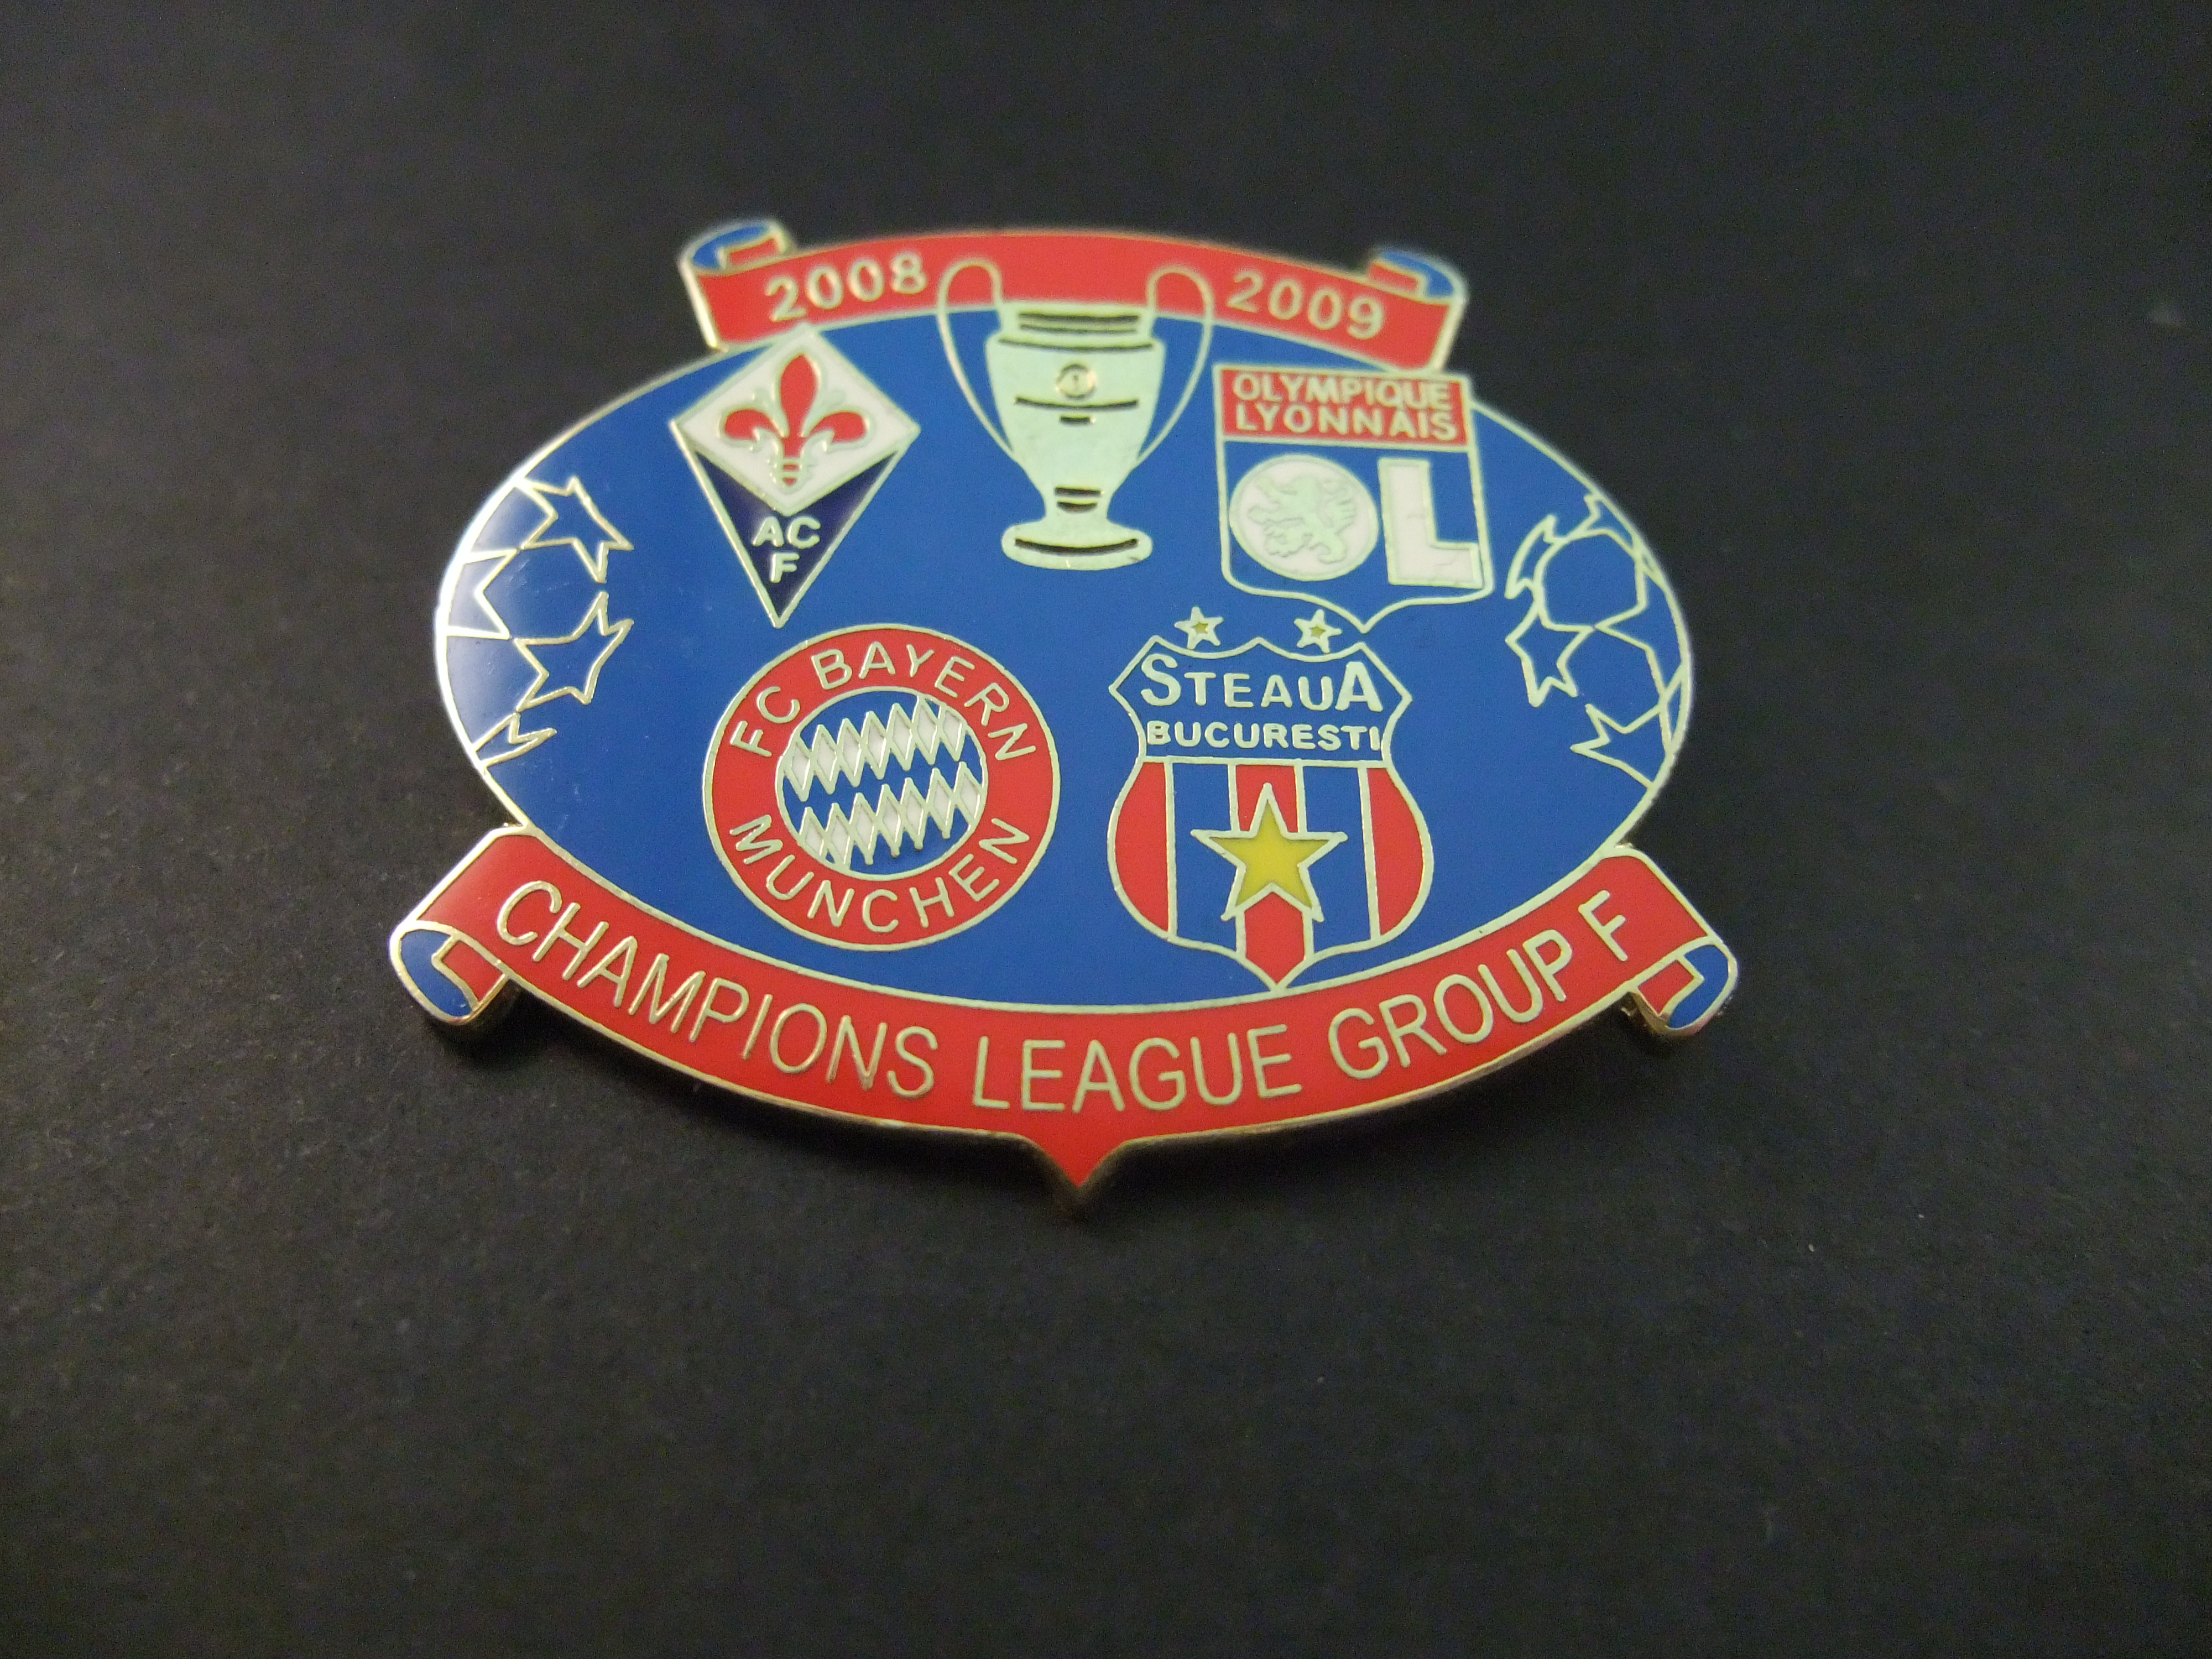 Voetbal Champions League Group F 2008-2009, Bayern München,Steaua Boekarest ,Olympique Lyonnais, ACF Fiorentina